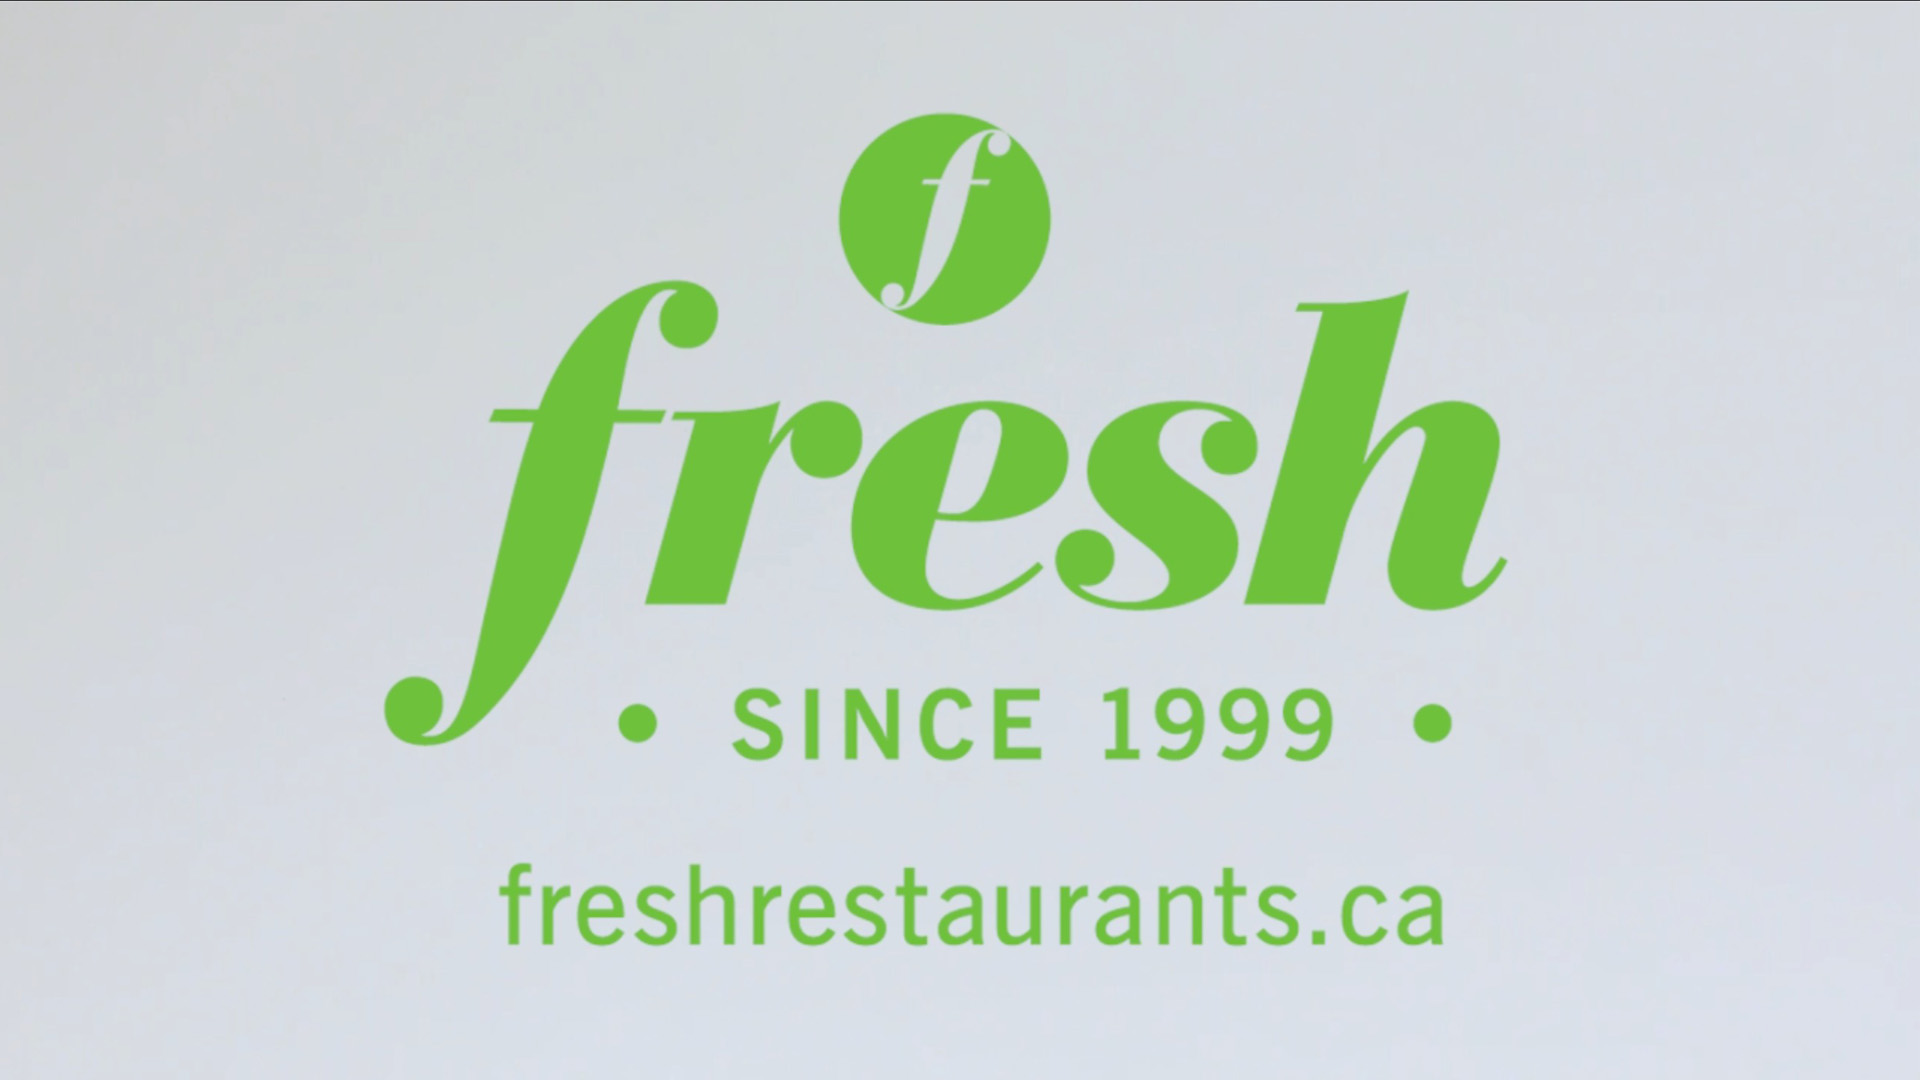 Fresh Restaurants promo video